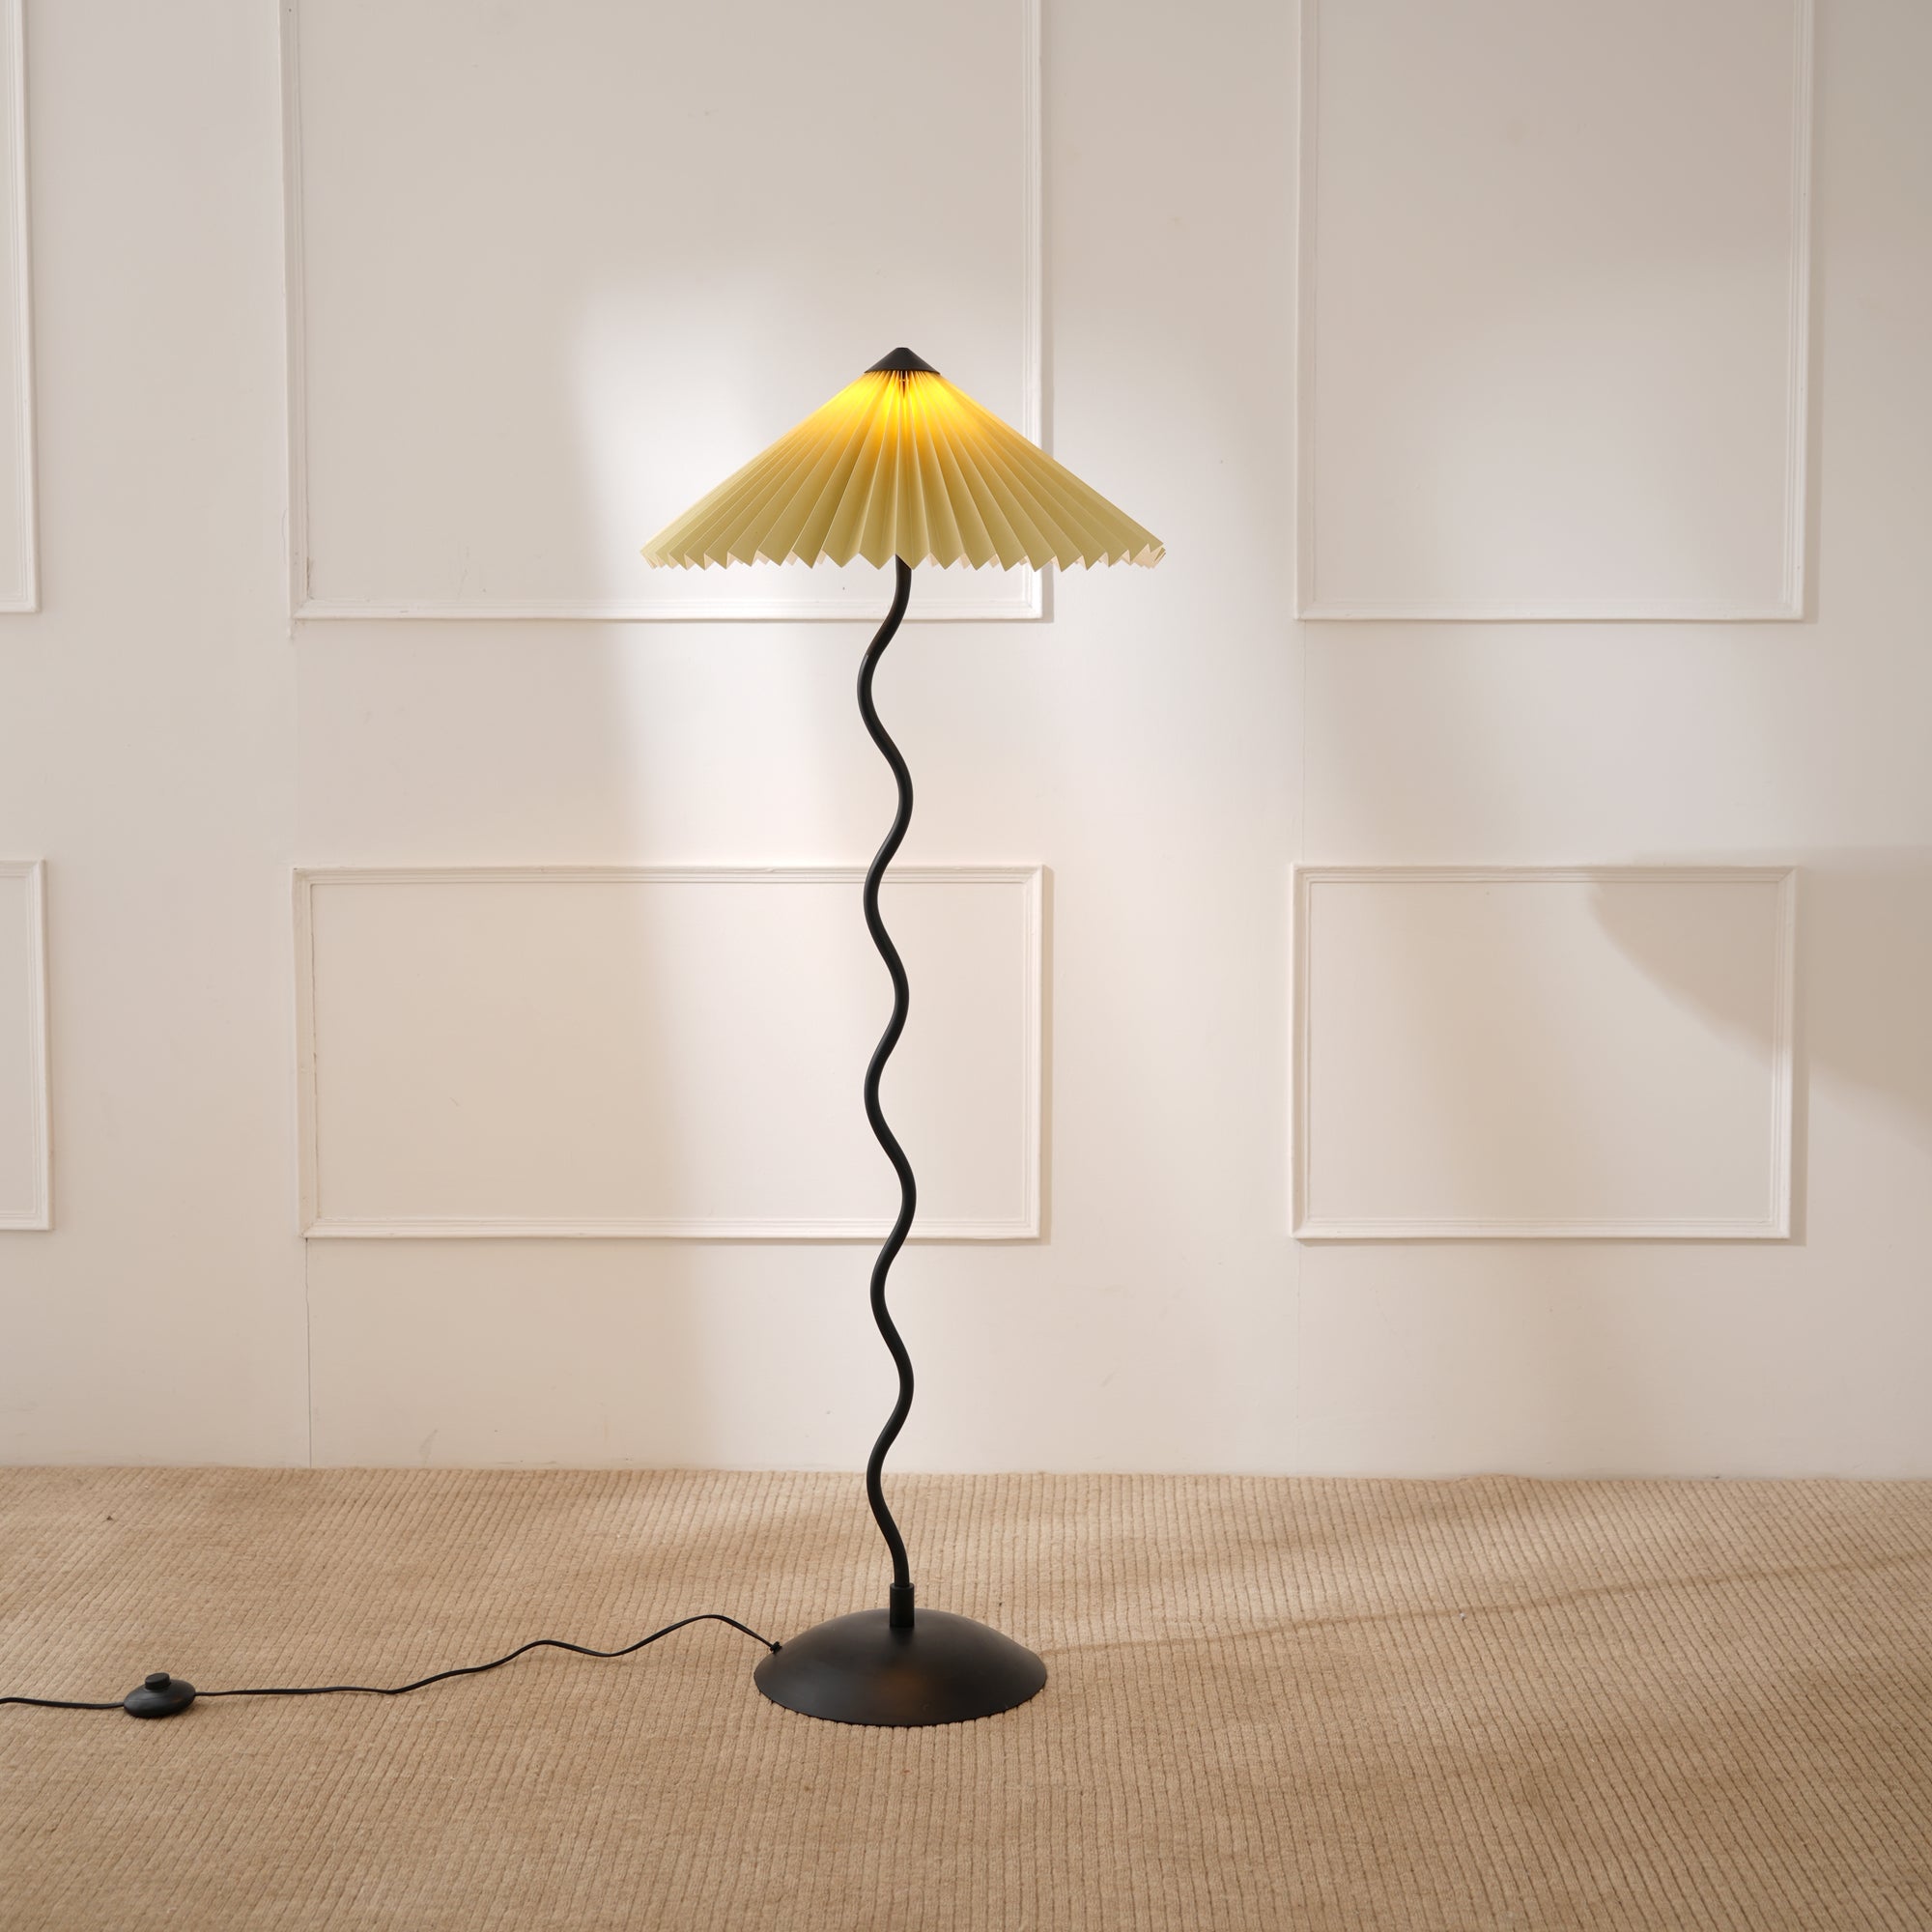 Wavy Floor Lamp - Contemporary Metal Base Lighting with Handpleated Shade